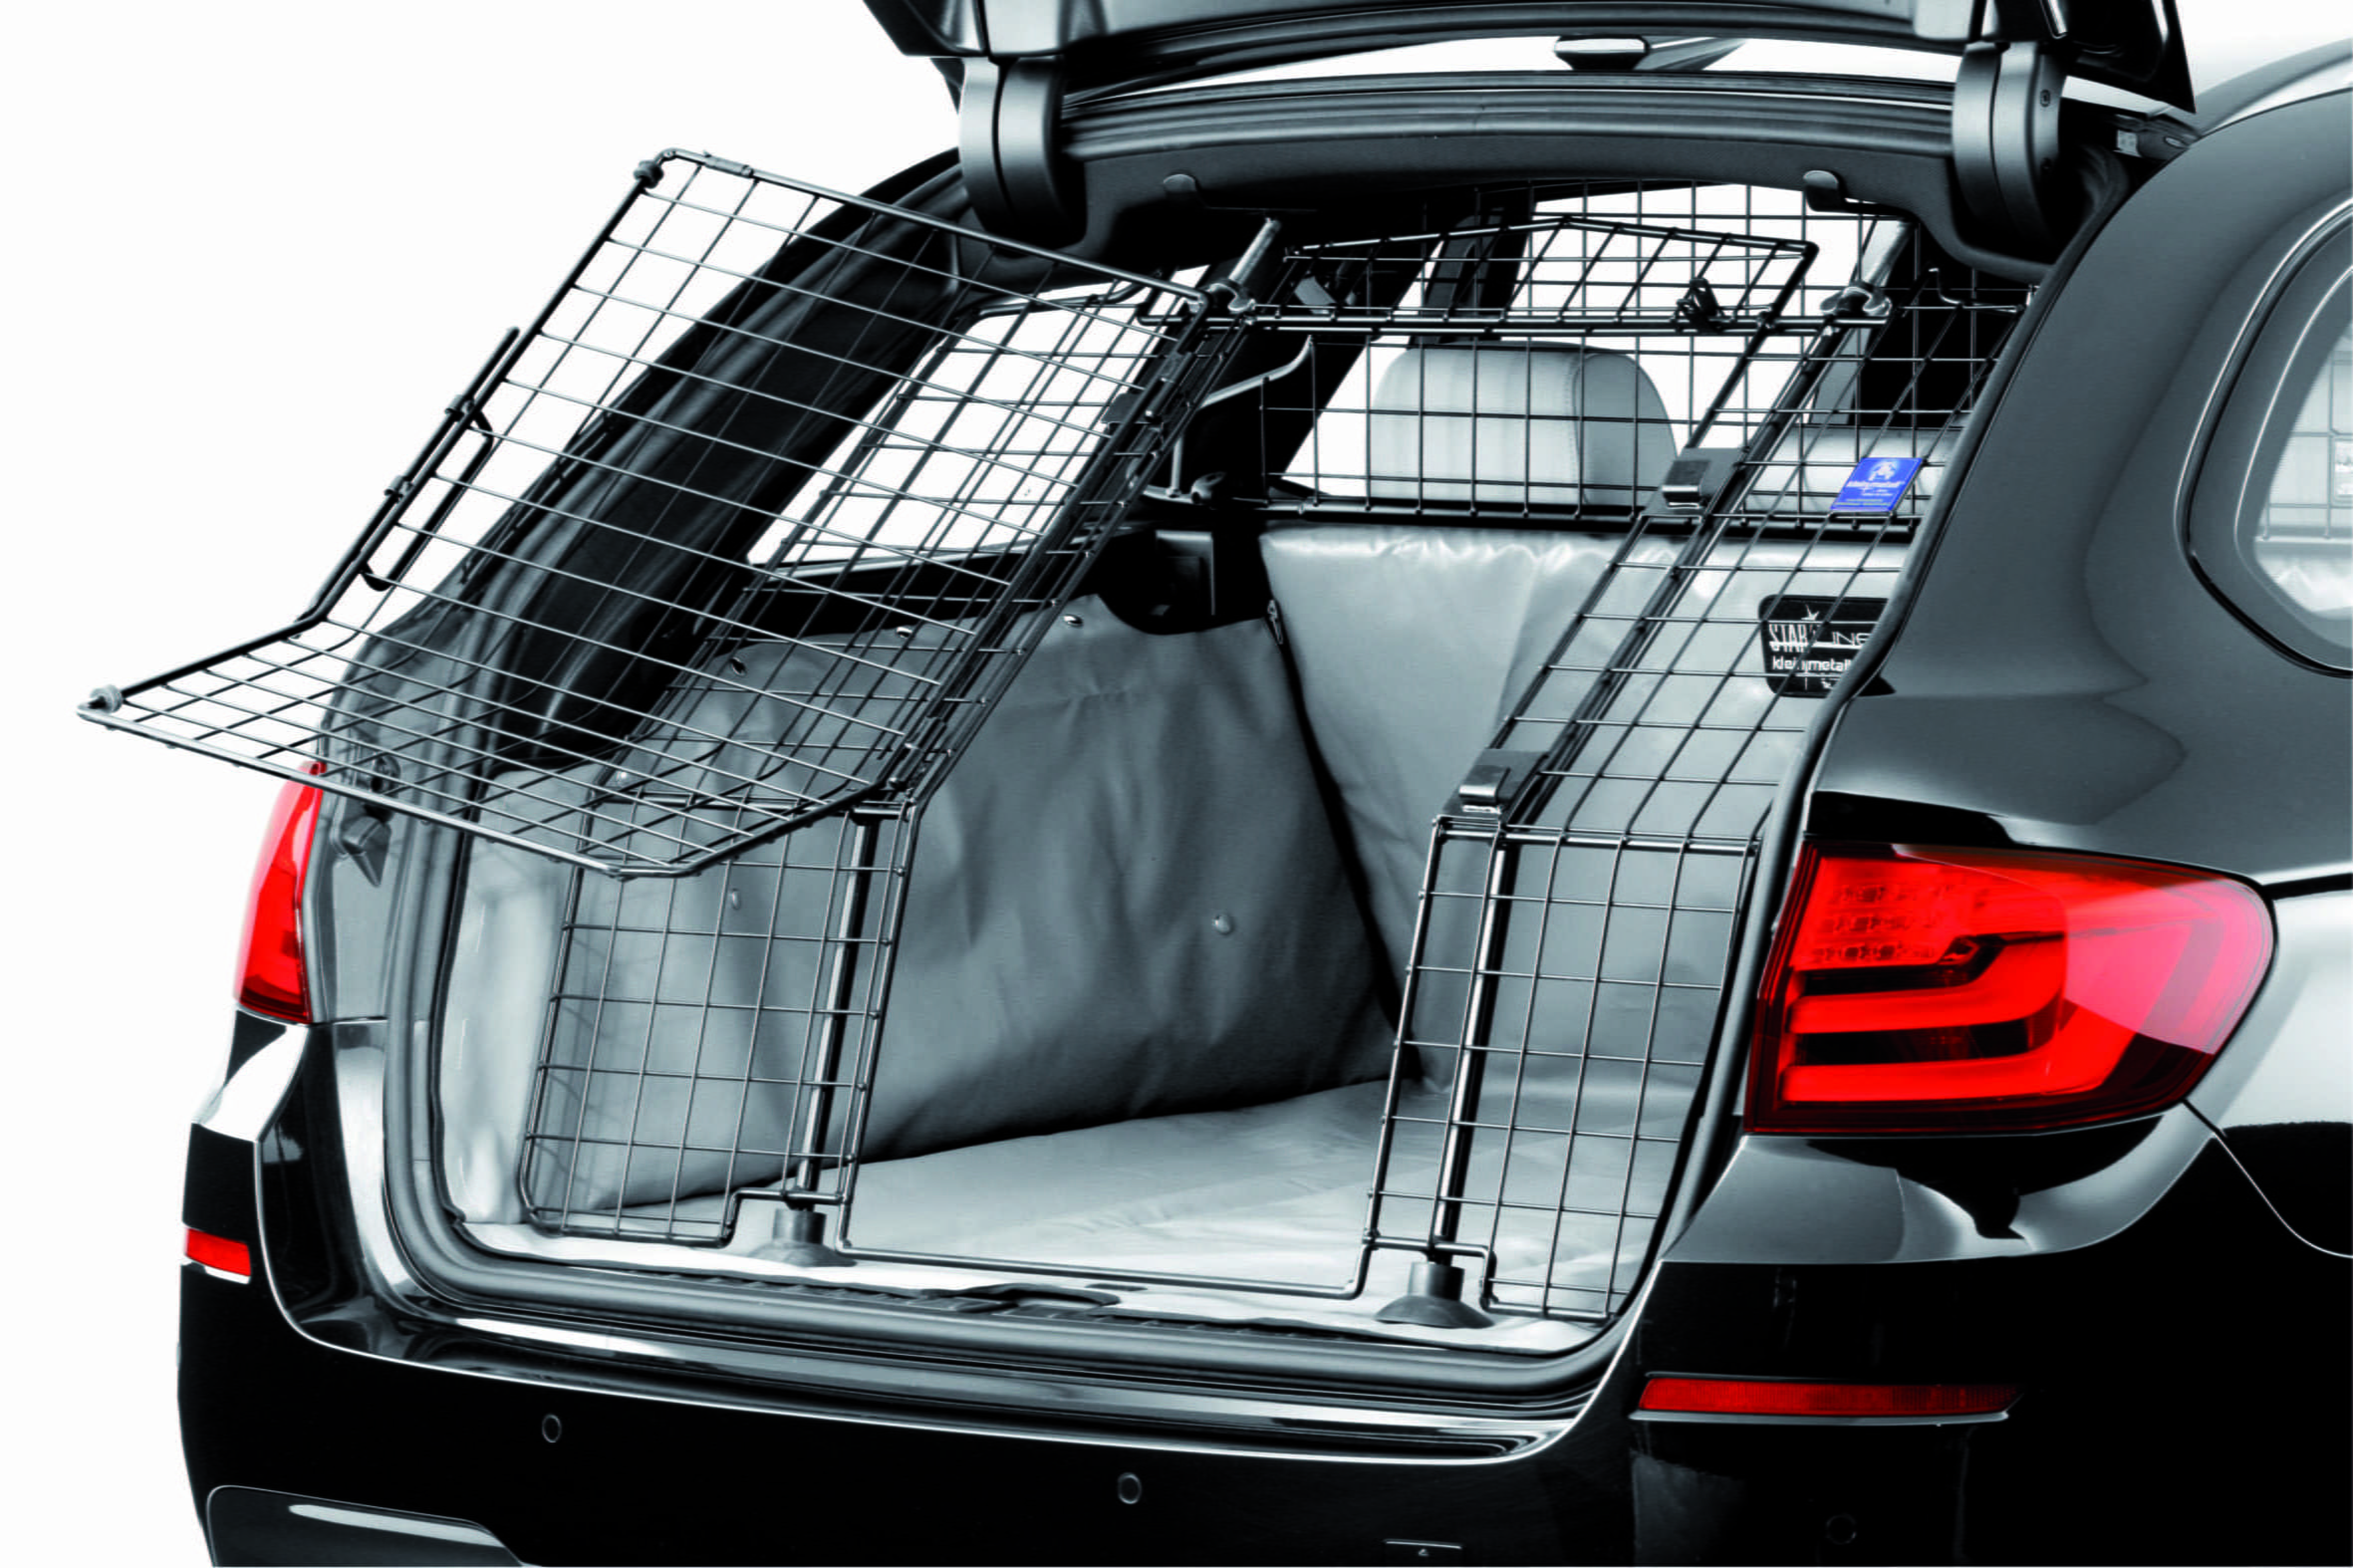 Kofferraumausbau für Hunde - VW Polo